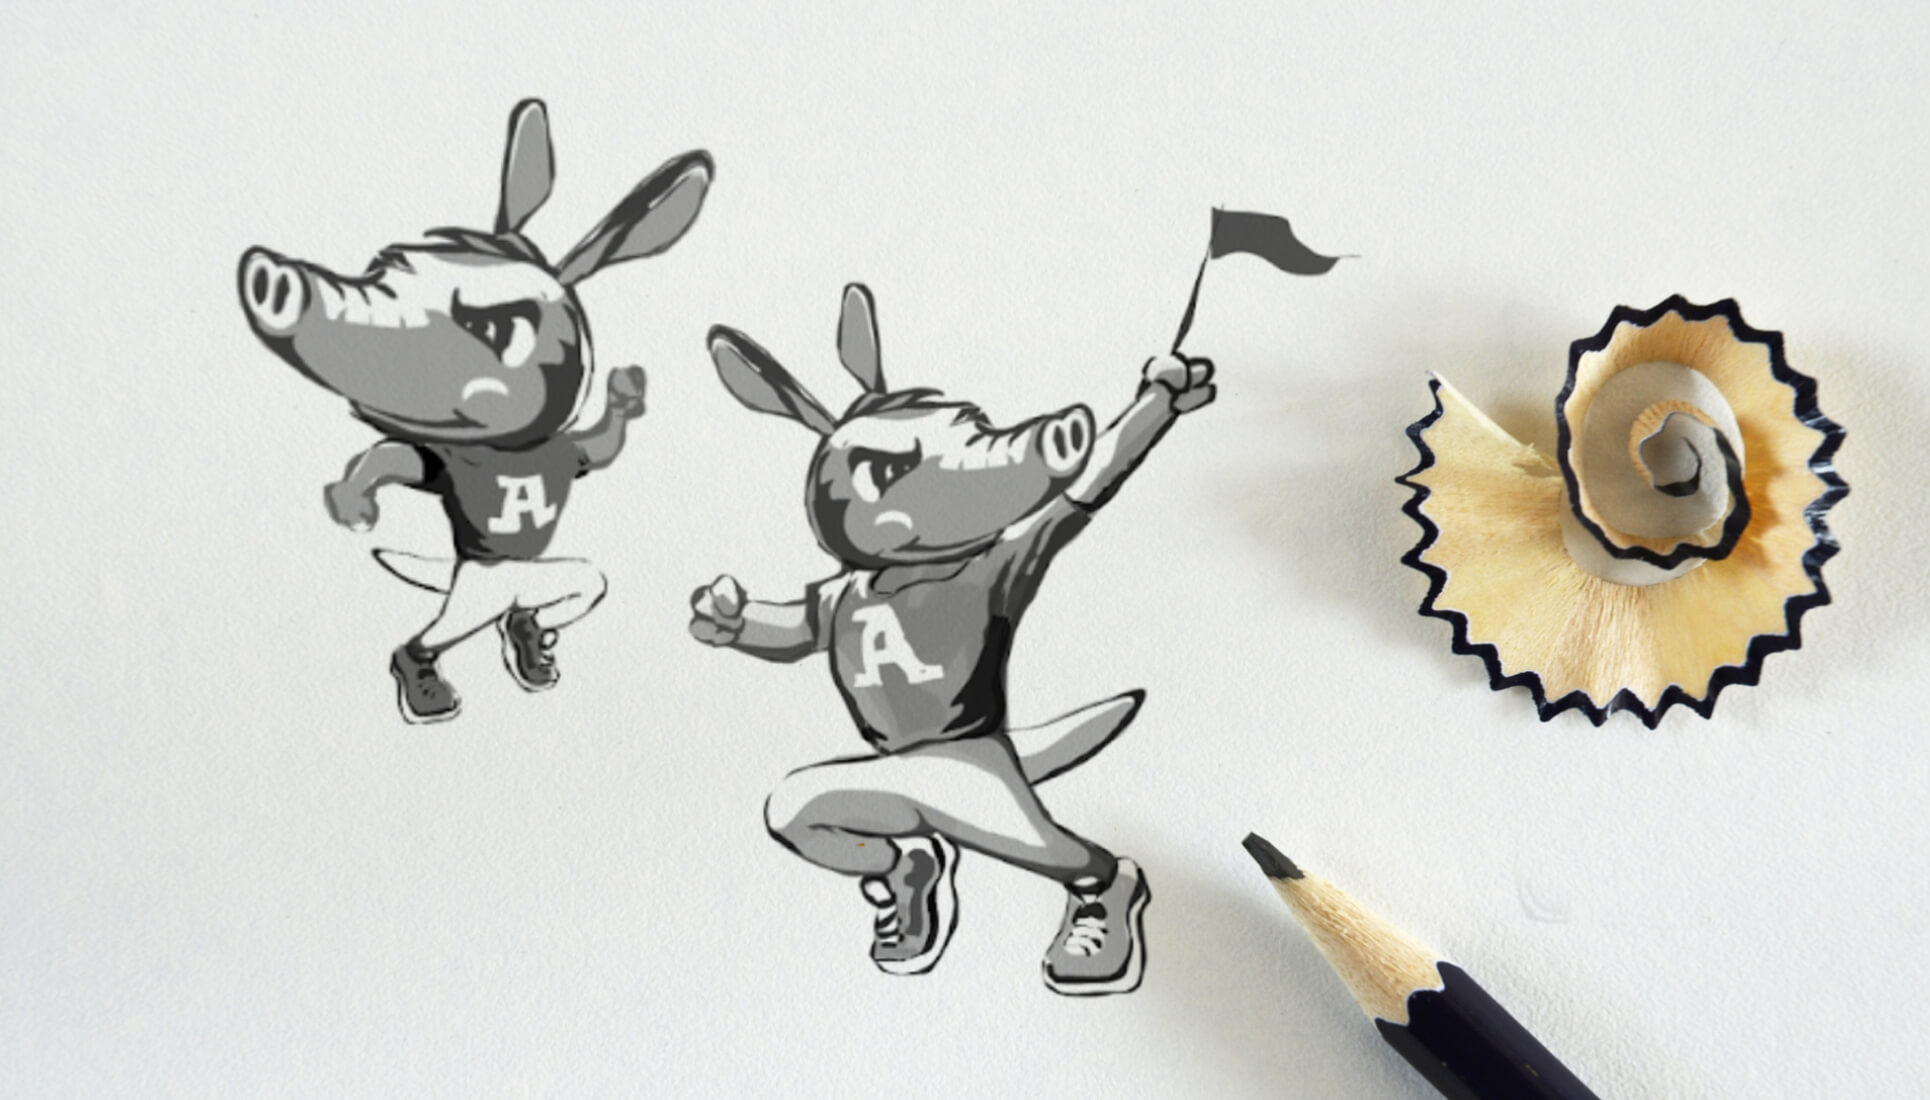 Sketch of a aardvark mascot.